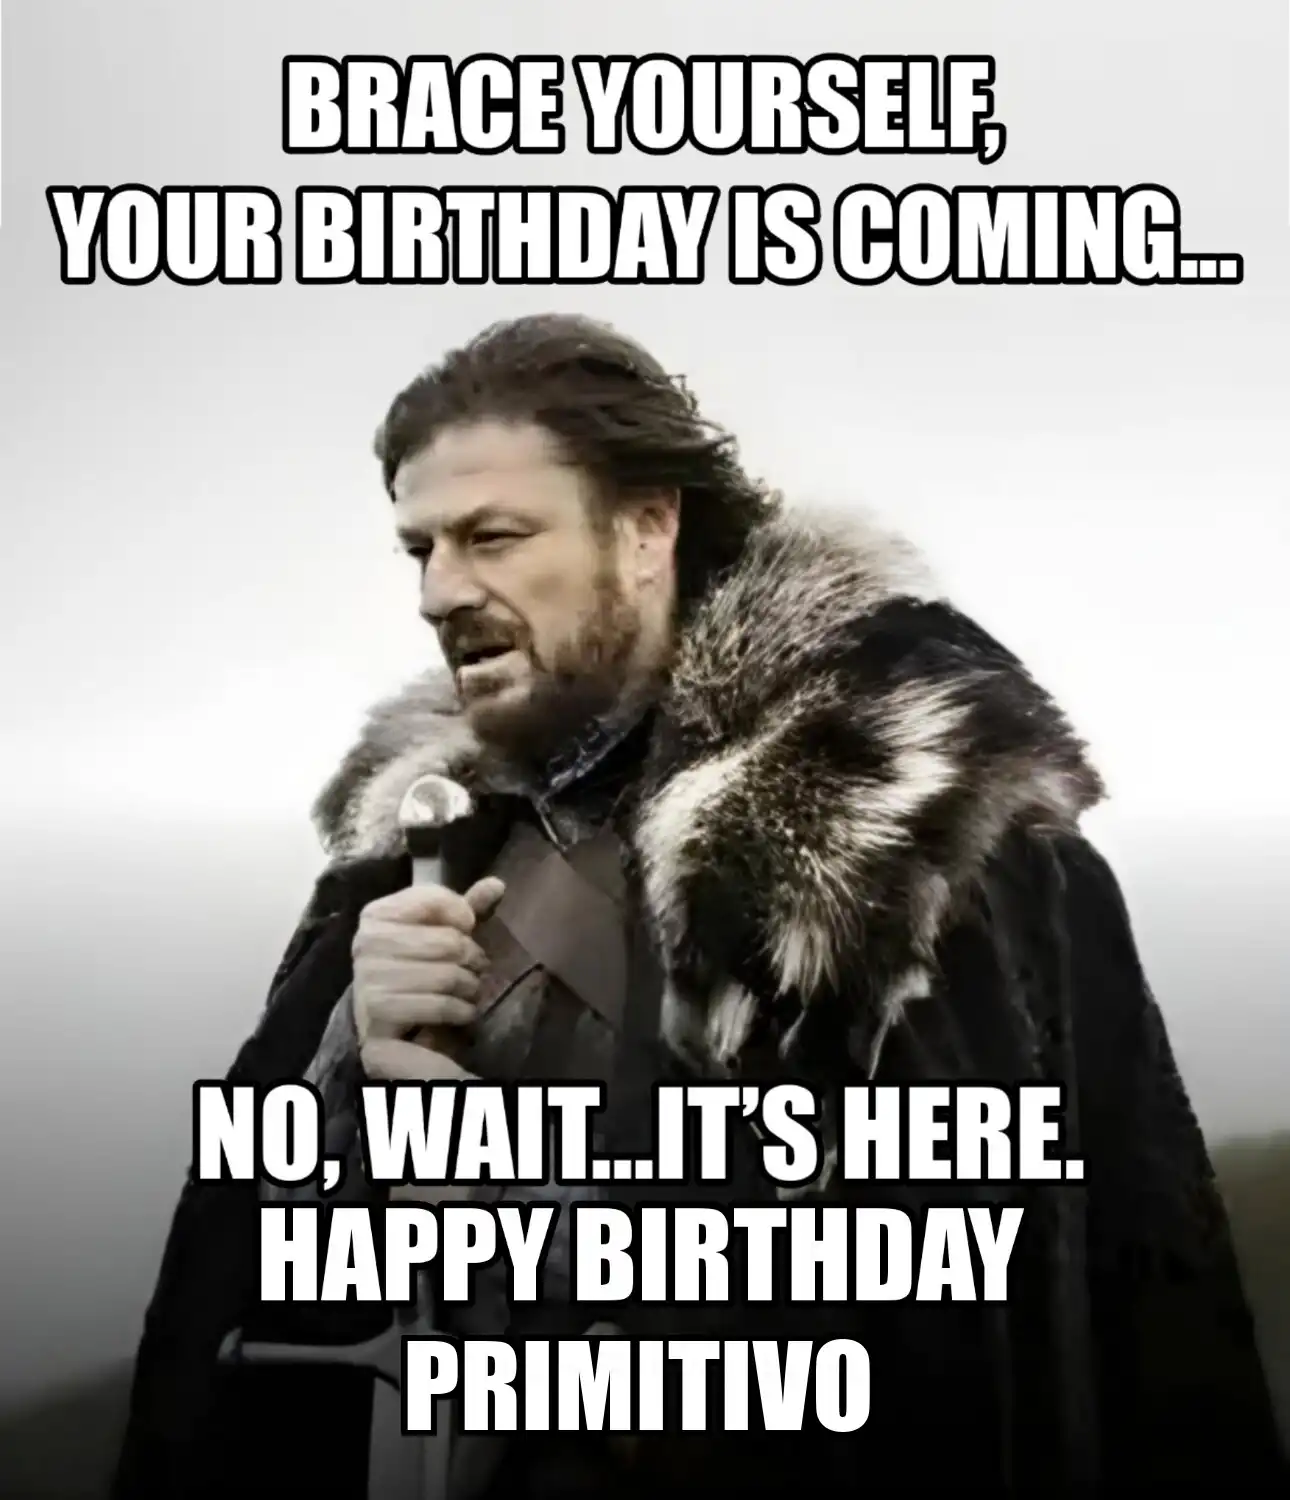 Happy Birthday Primitivo Brace Yourself Your Birthday Is Coming Meme